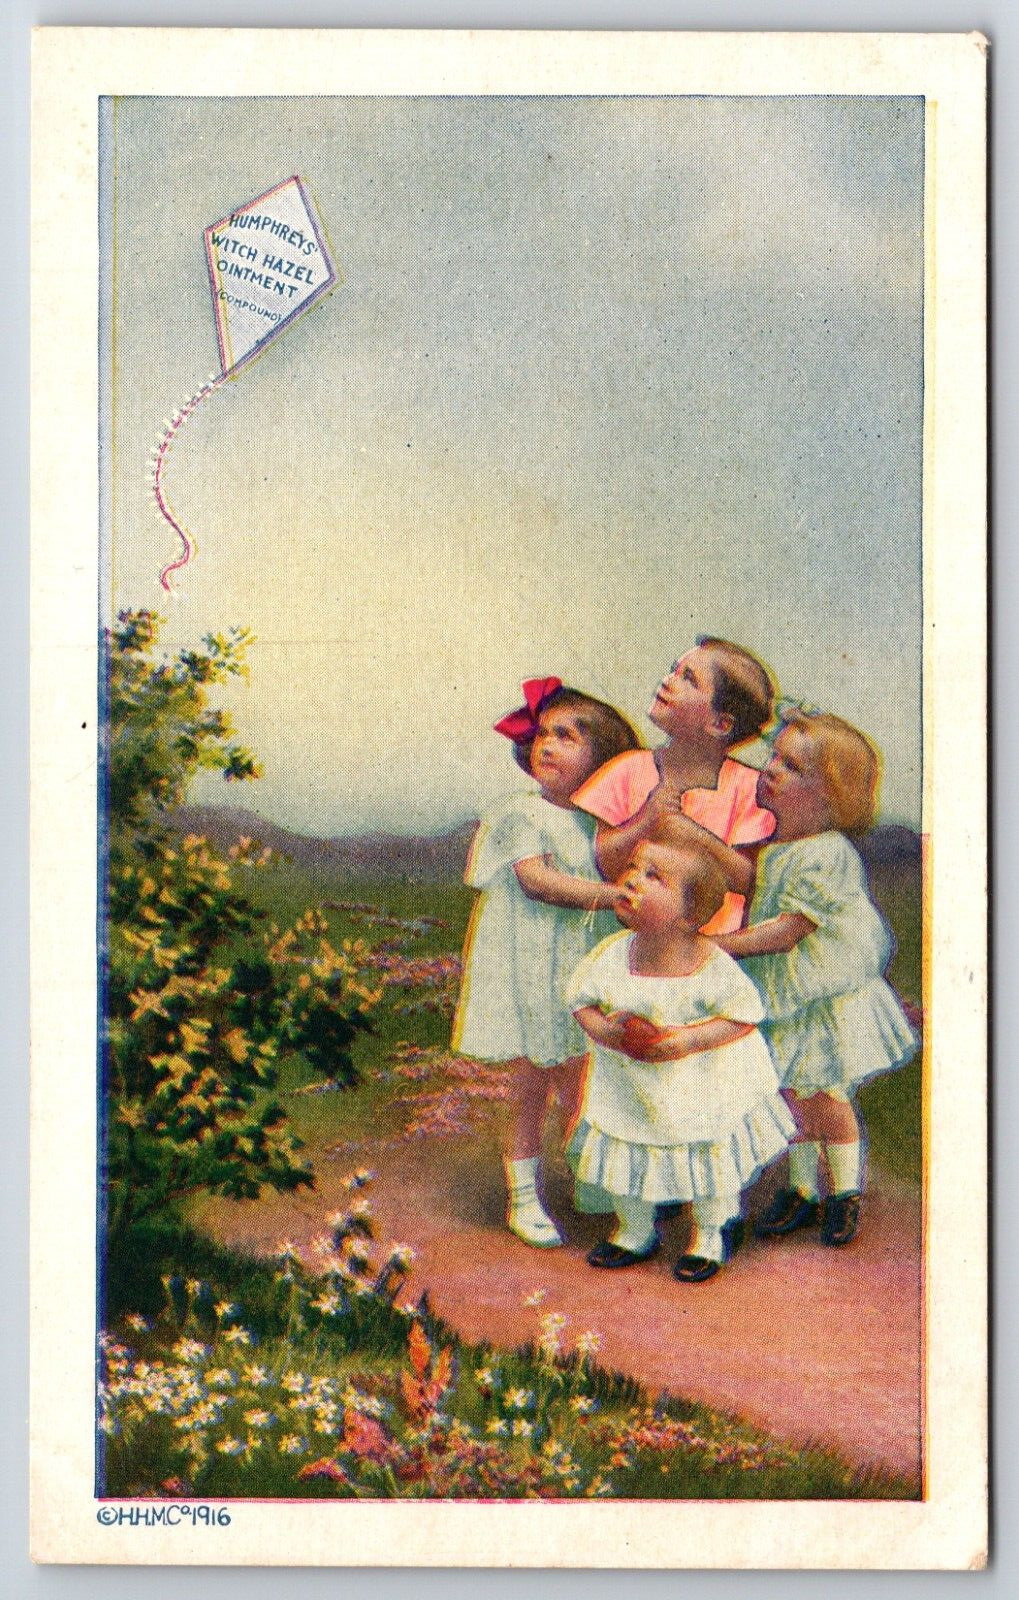 Humphrey's Witch Hazel Ointment Advertising Postcard Kids Fly Kite PM c1916-20's